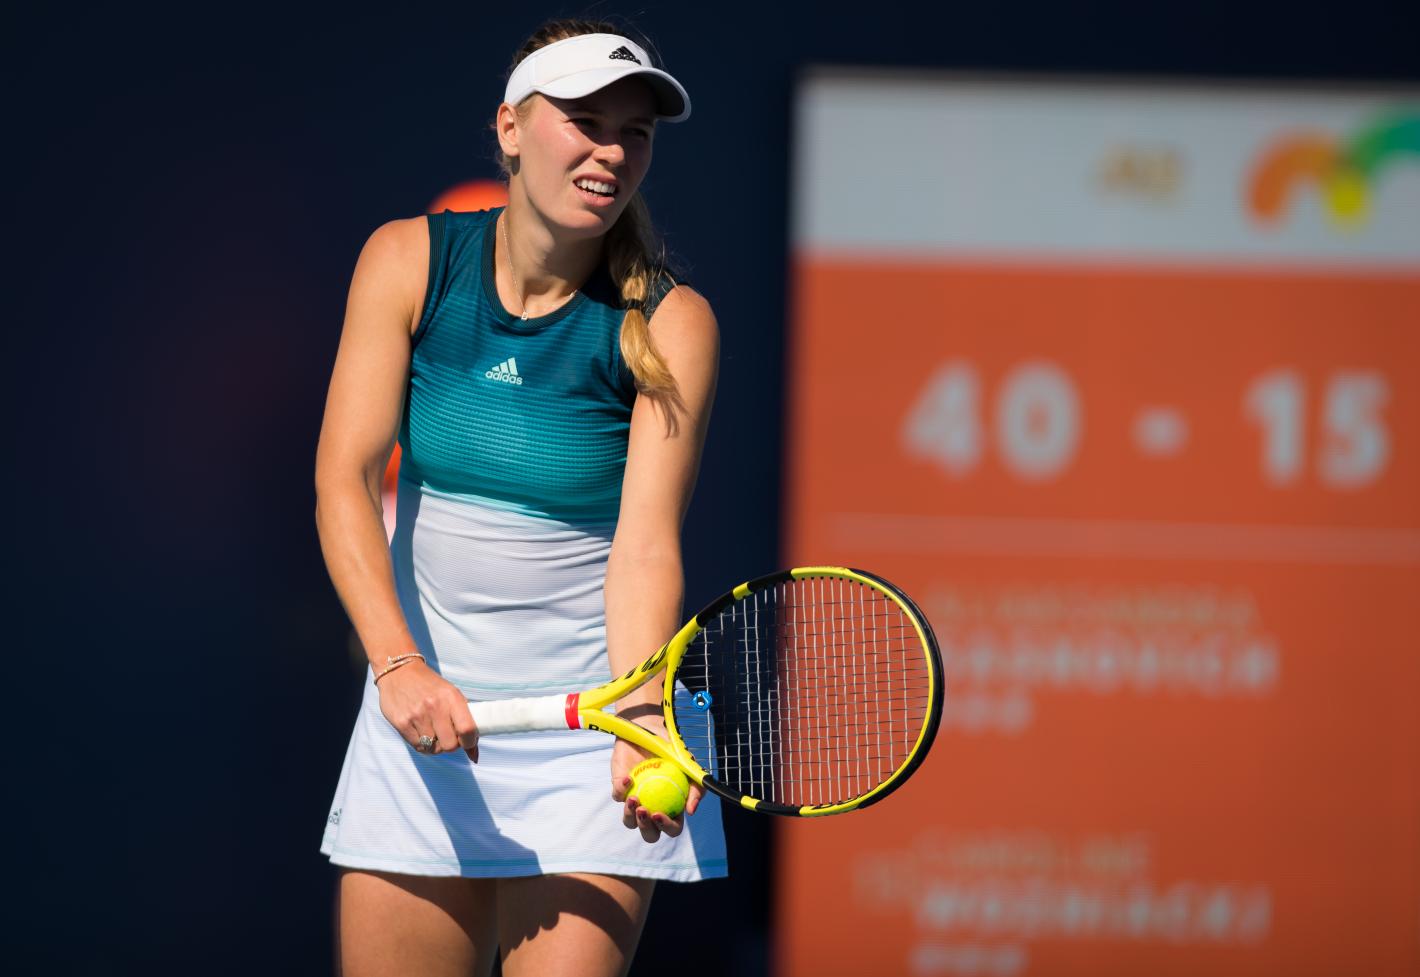 Sorpresa: Wozniacki pierde en la primera ronda de Roland Garros